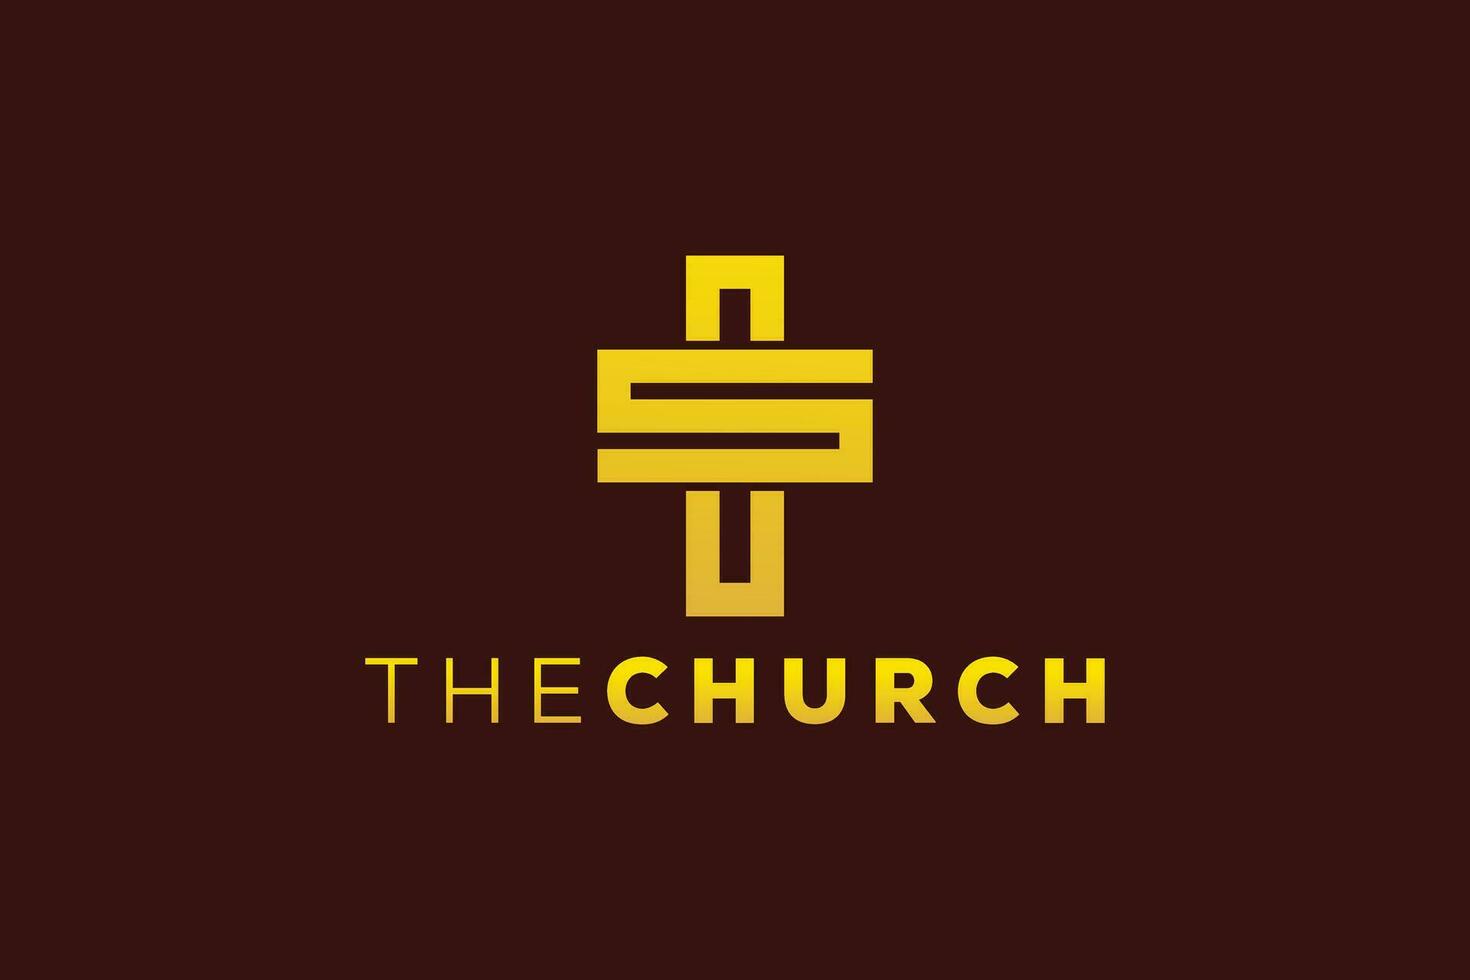 de moda y profesional letra s Iglesia firmar cristiano y pacífico vector logo diseño modelo